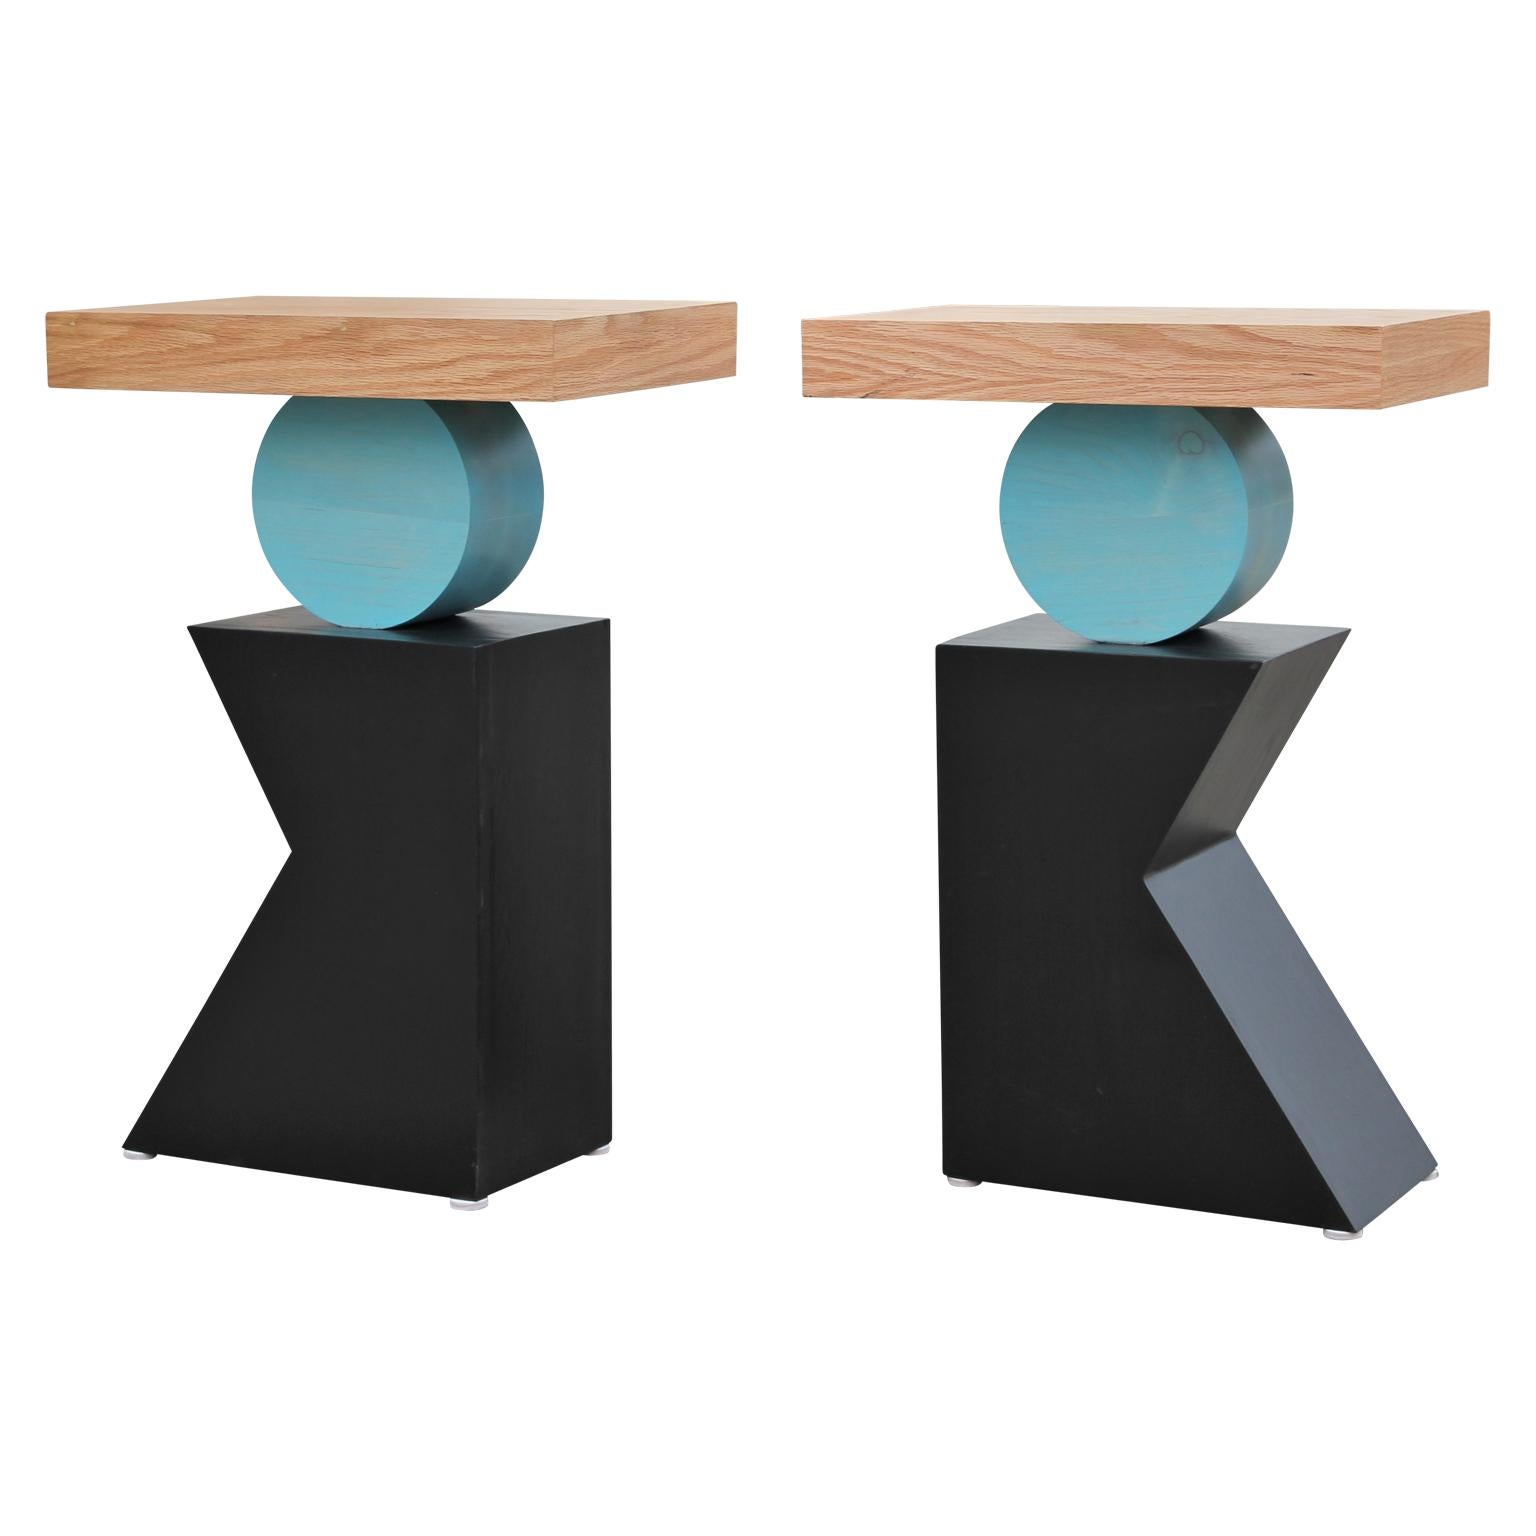 North American Pair of Geometric Postmodern Handmade Walnut Blue and Black Side or End Tables